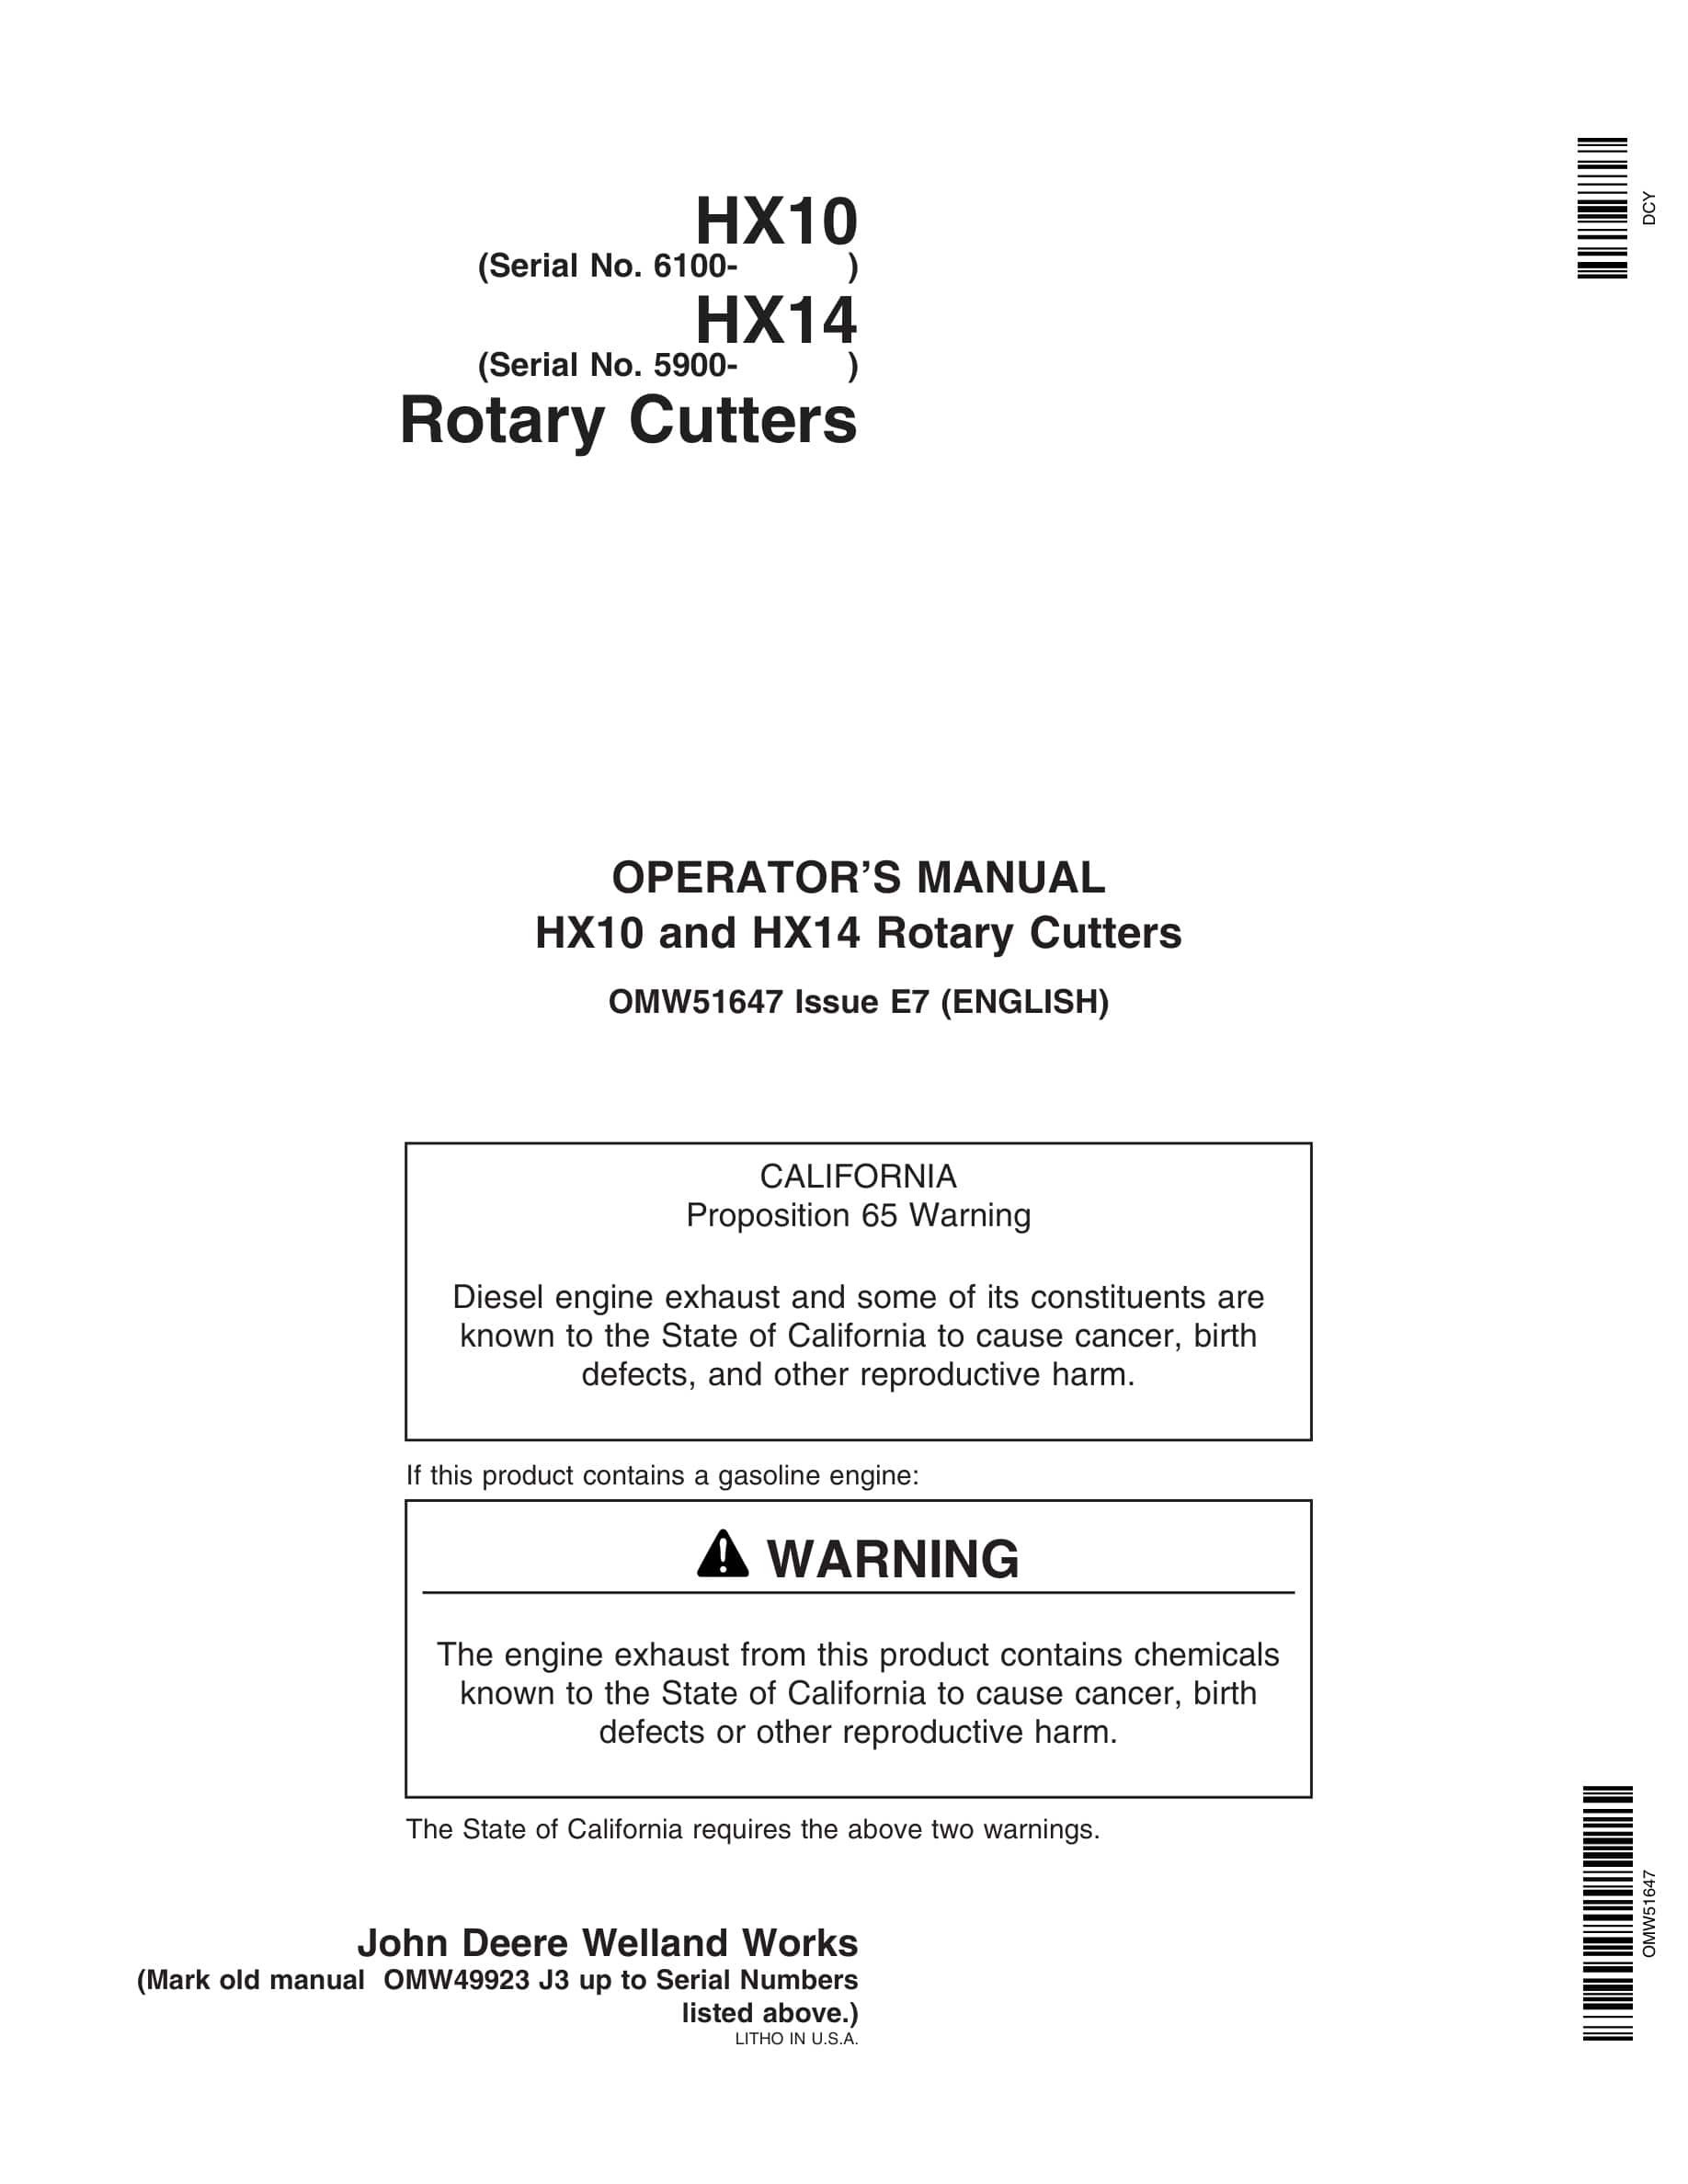 John Deere HX10 and HX14 Rotary Cutter Operator Manual OMW51647-1